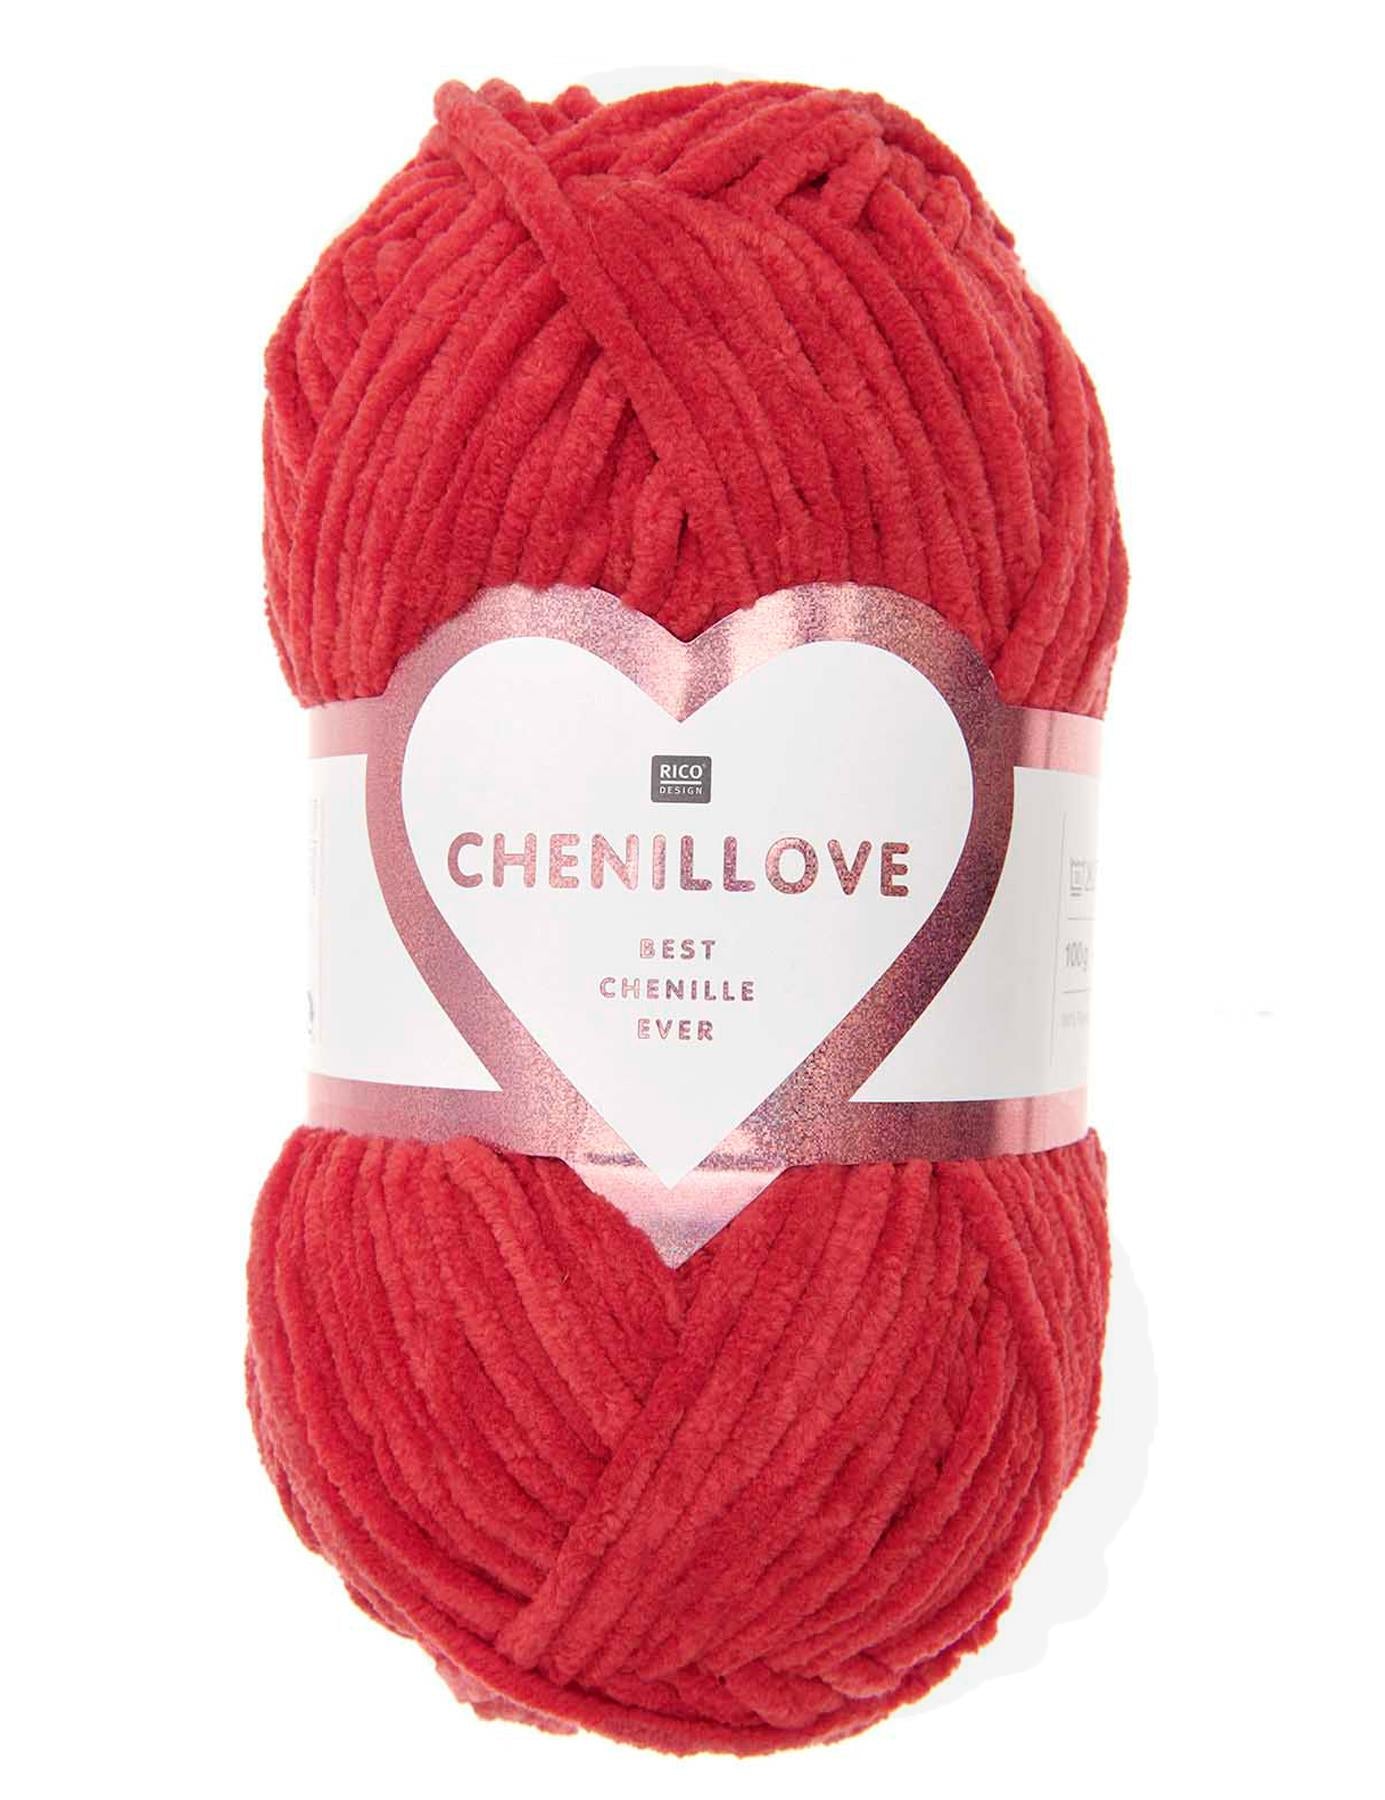 RICO Chenillove Red (006) chenille yarn - 100g